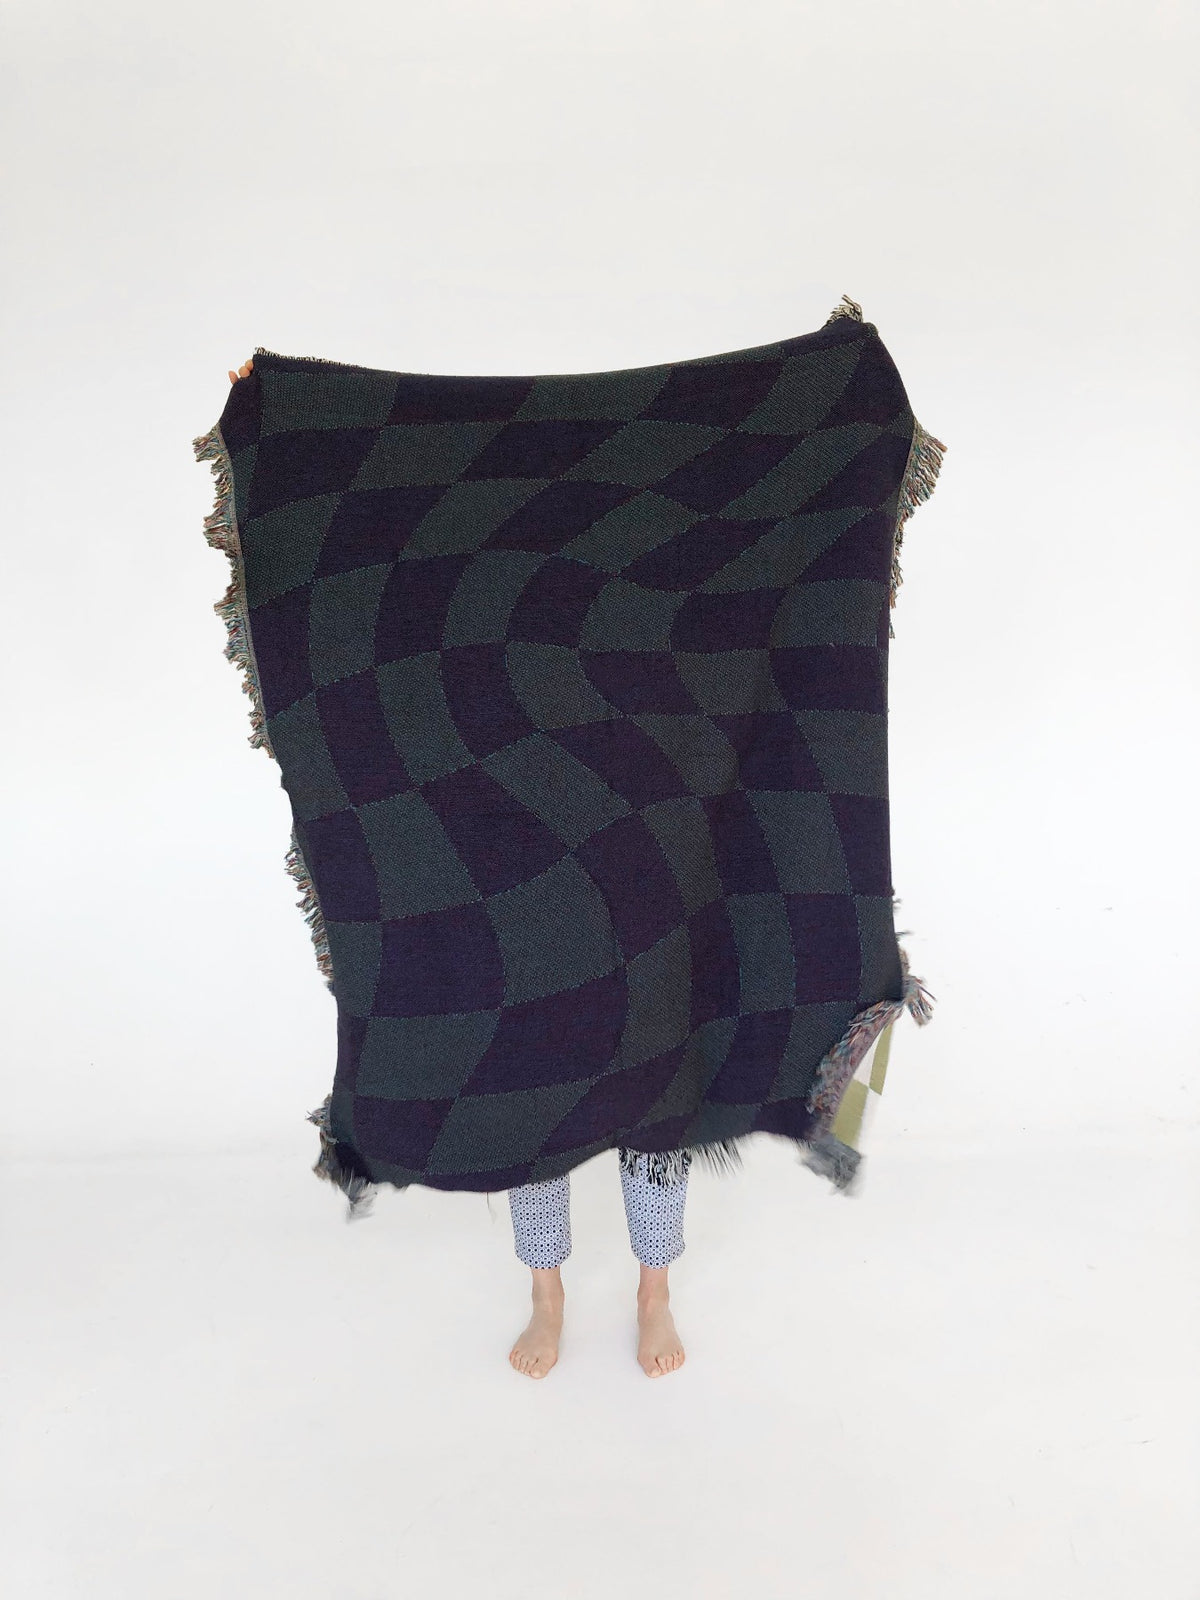 The Wonderful Whirl Blanket | Undisclosed